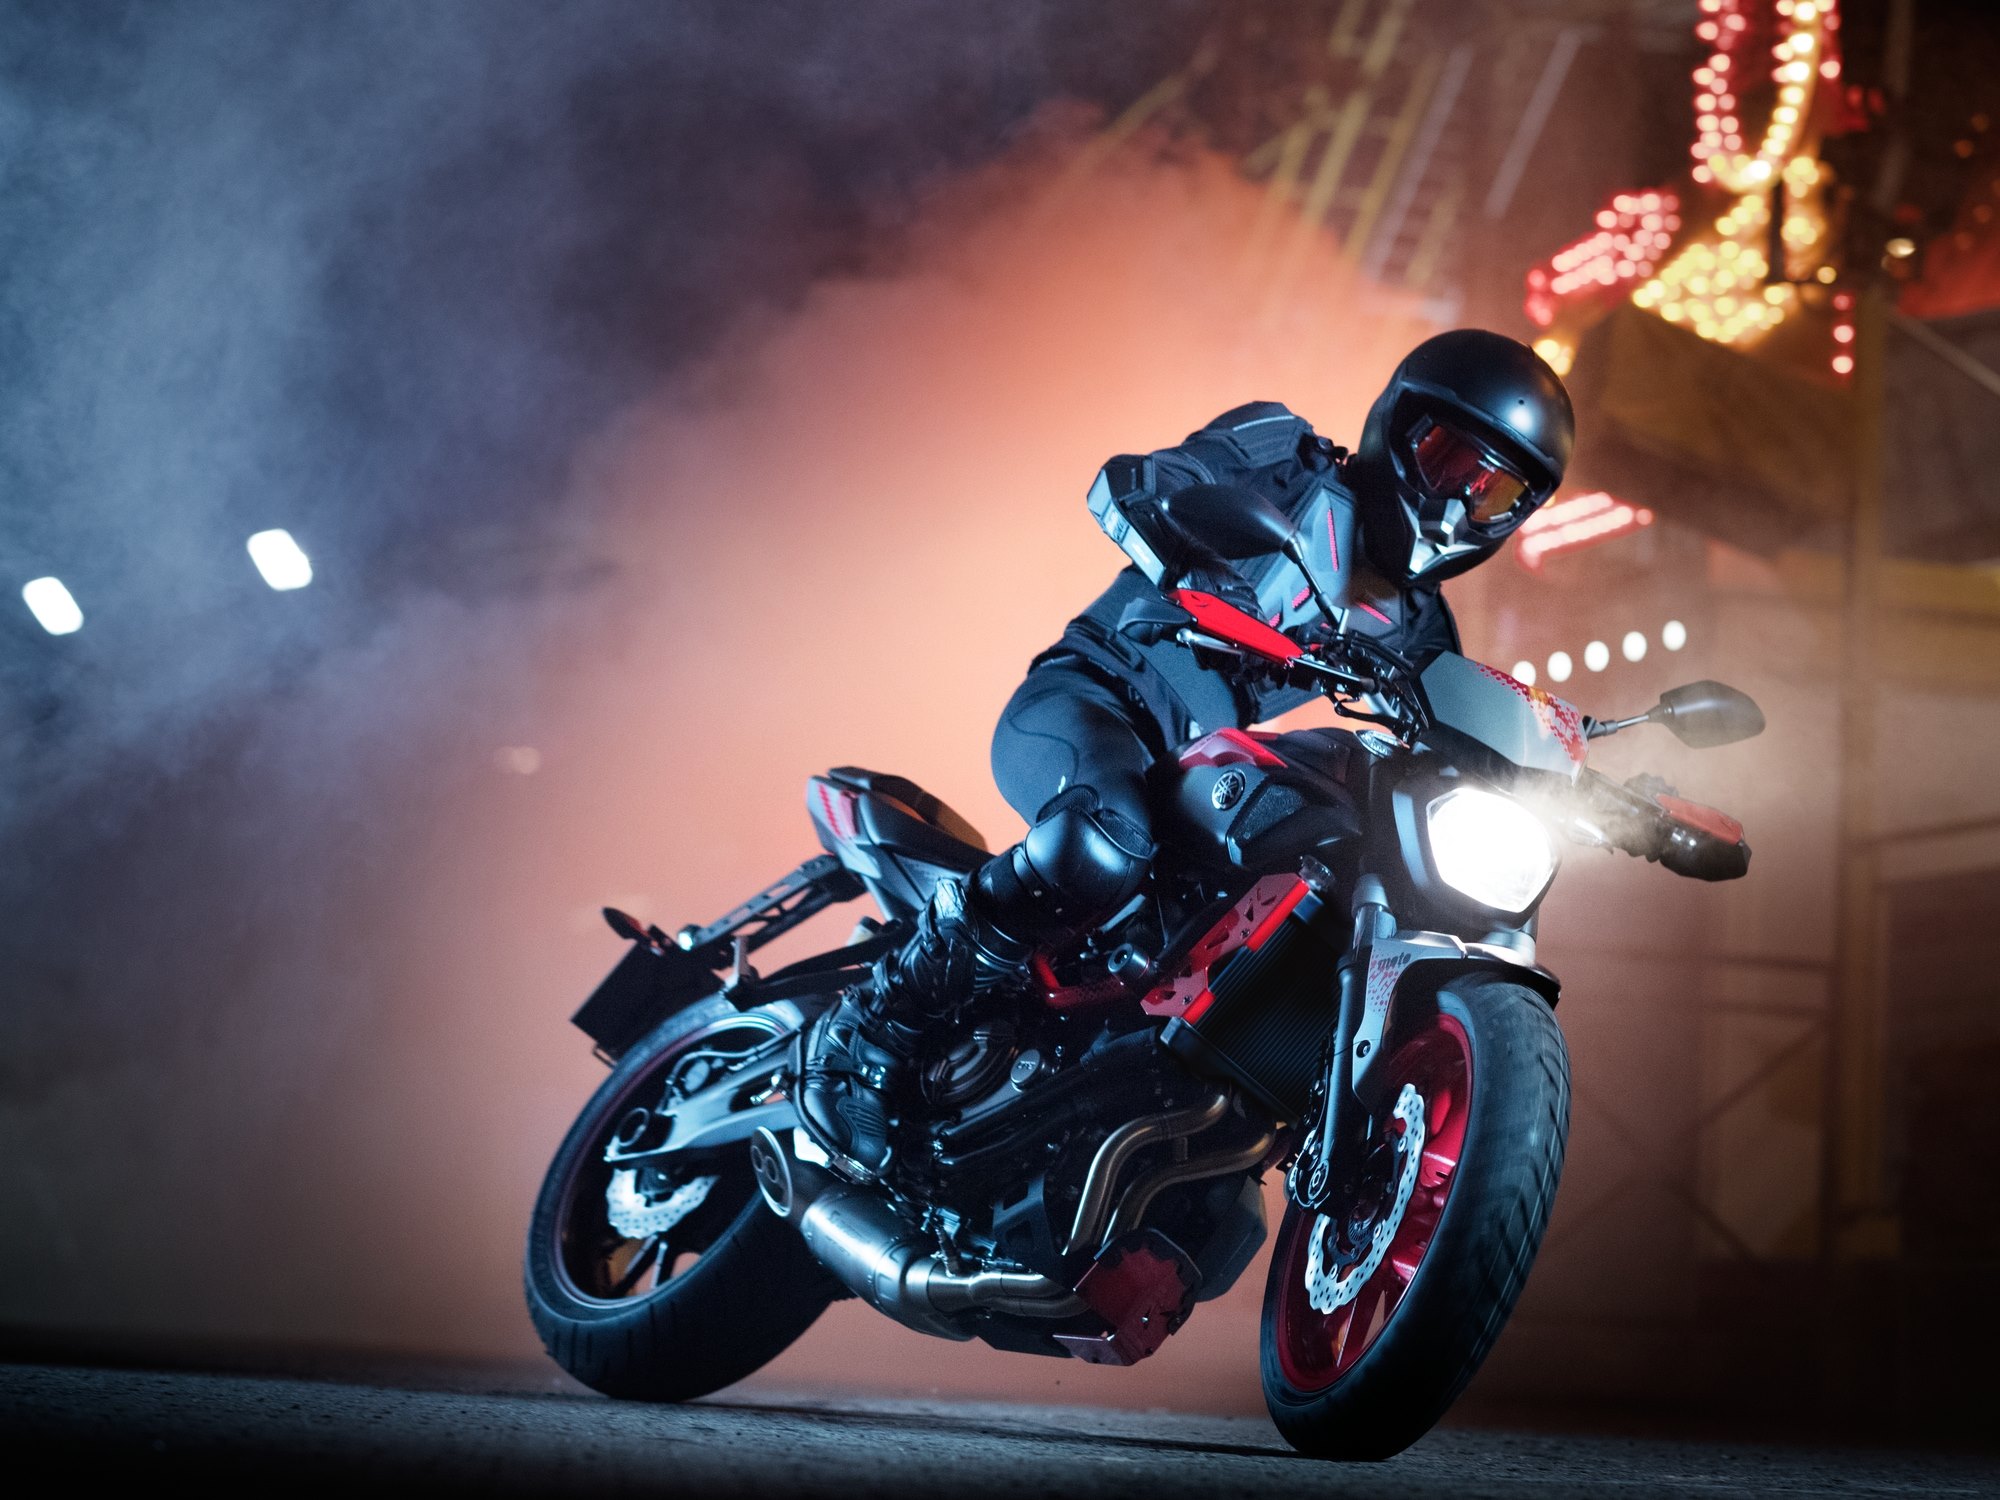 Intermot 2014: Yamaha release MT-07 ‘Moto Cage’ edition